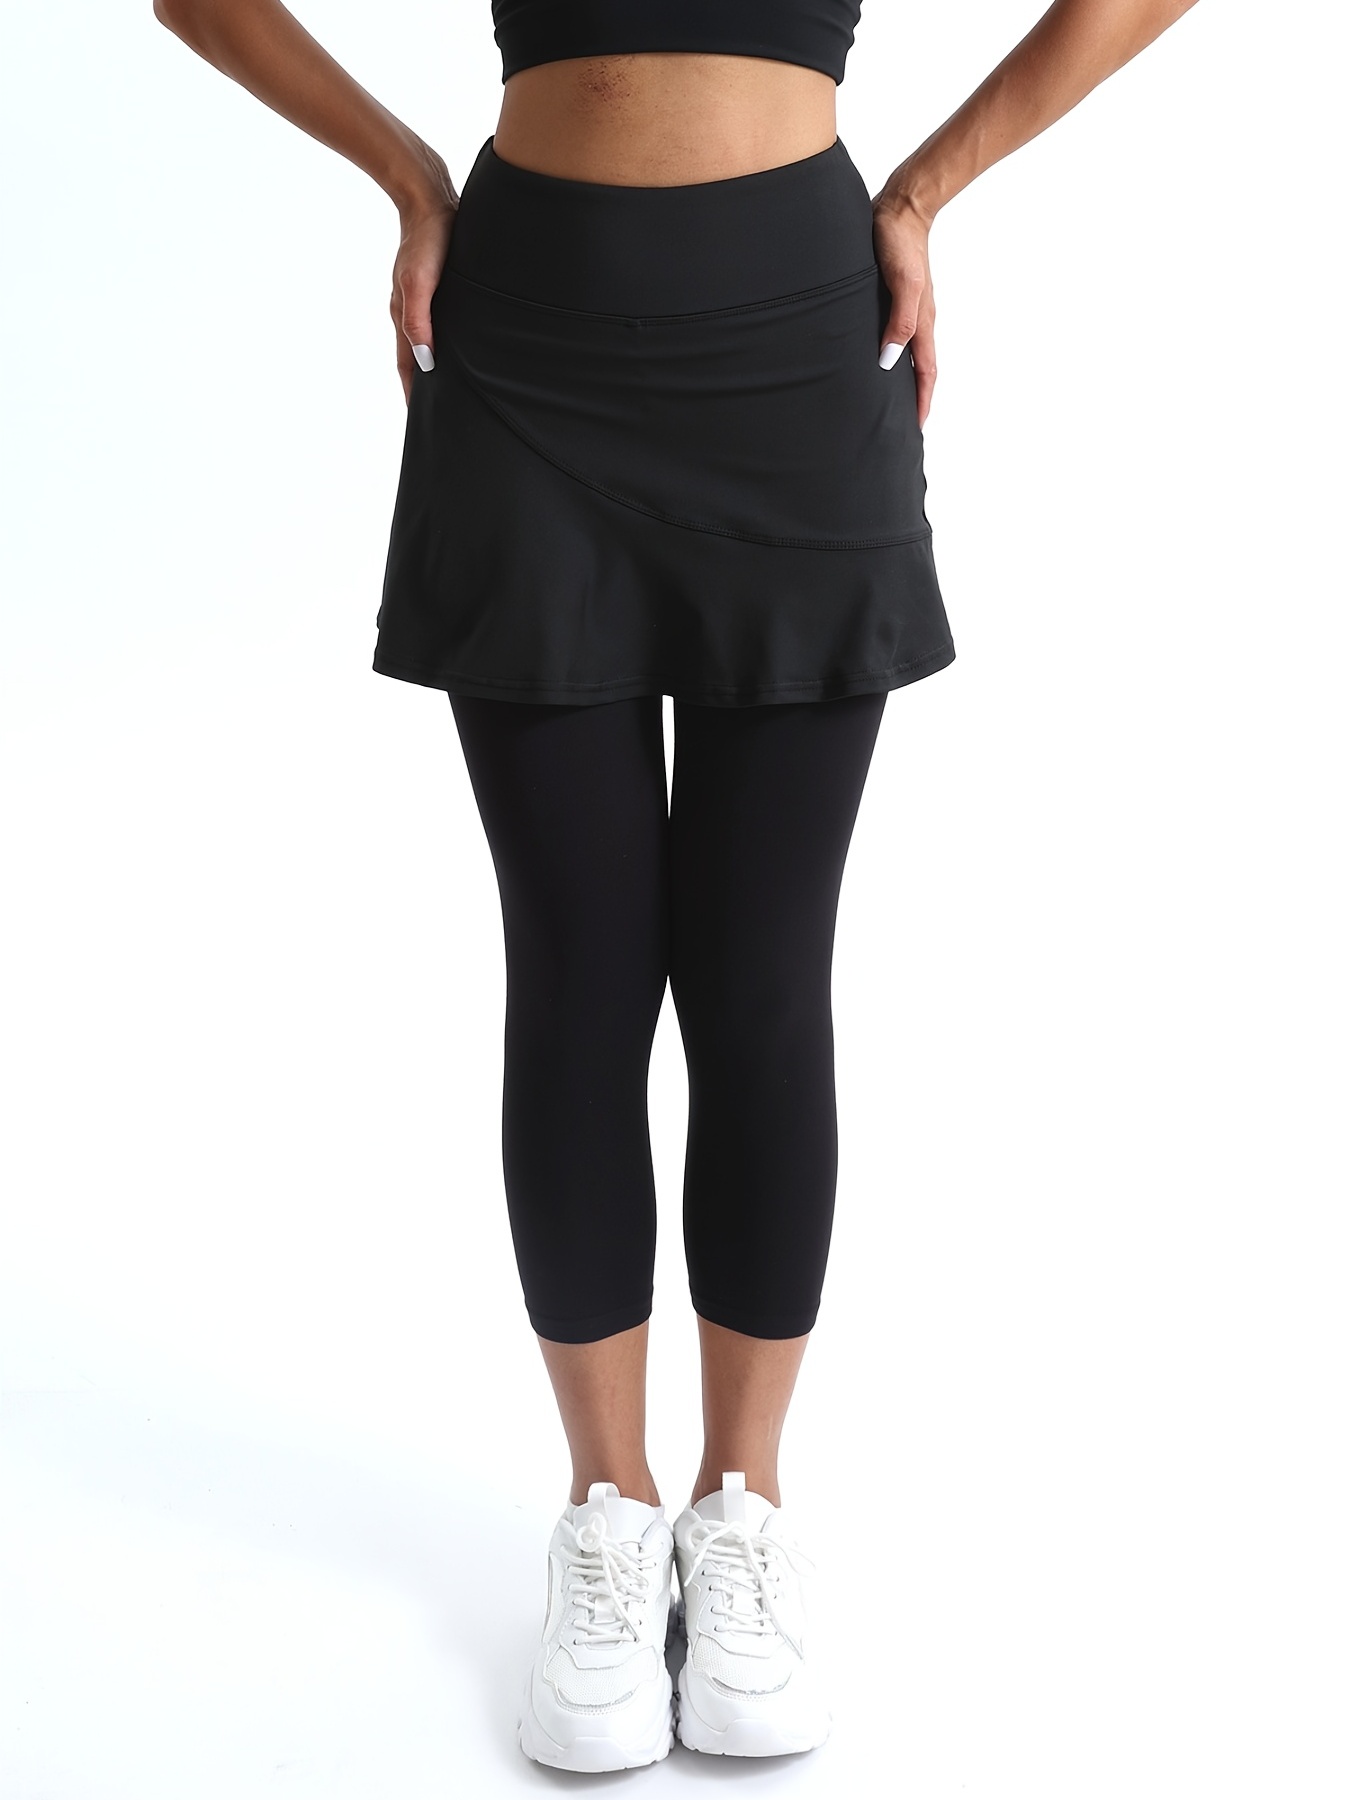 2-in-1 Running Capri Skirts, Tennis Golf Skort Capri Leggings With Pocket,  Women's Activewear